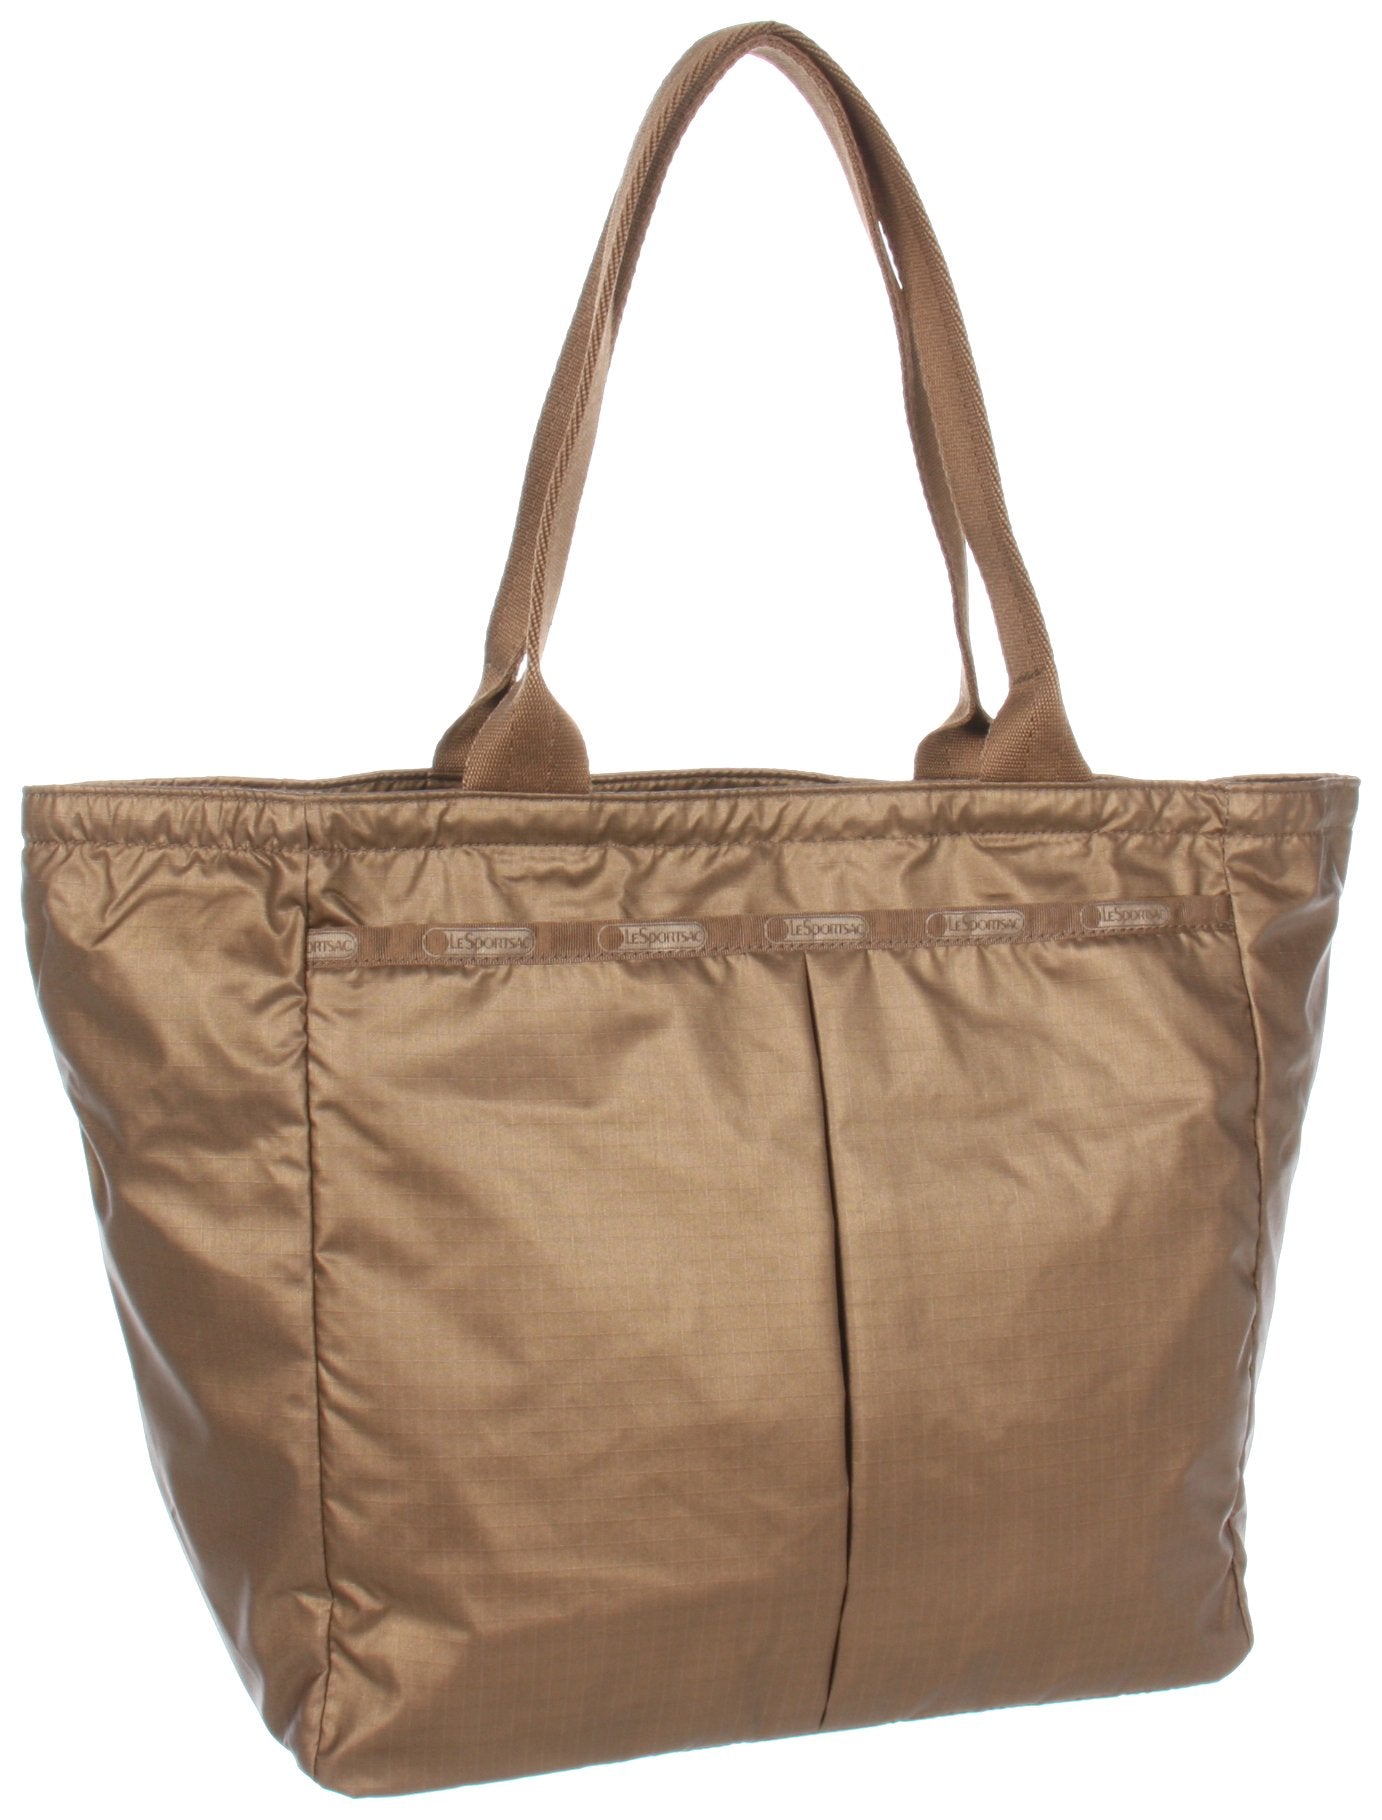 Lesportsac Everygirl Handbag Tote Bag - Tilly